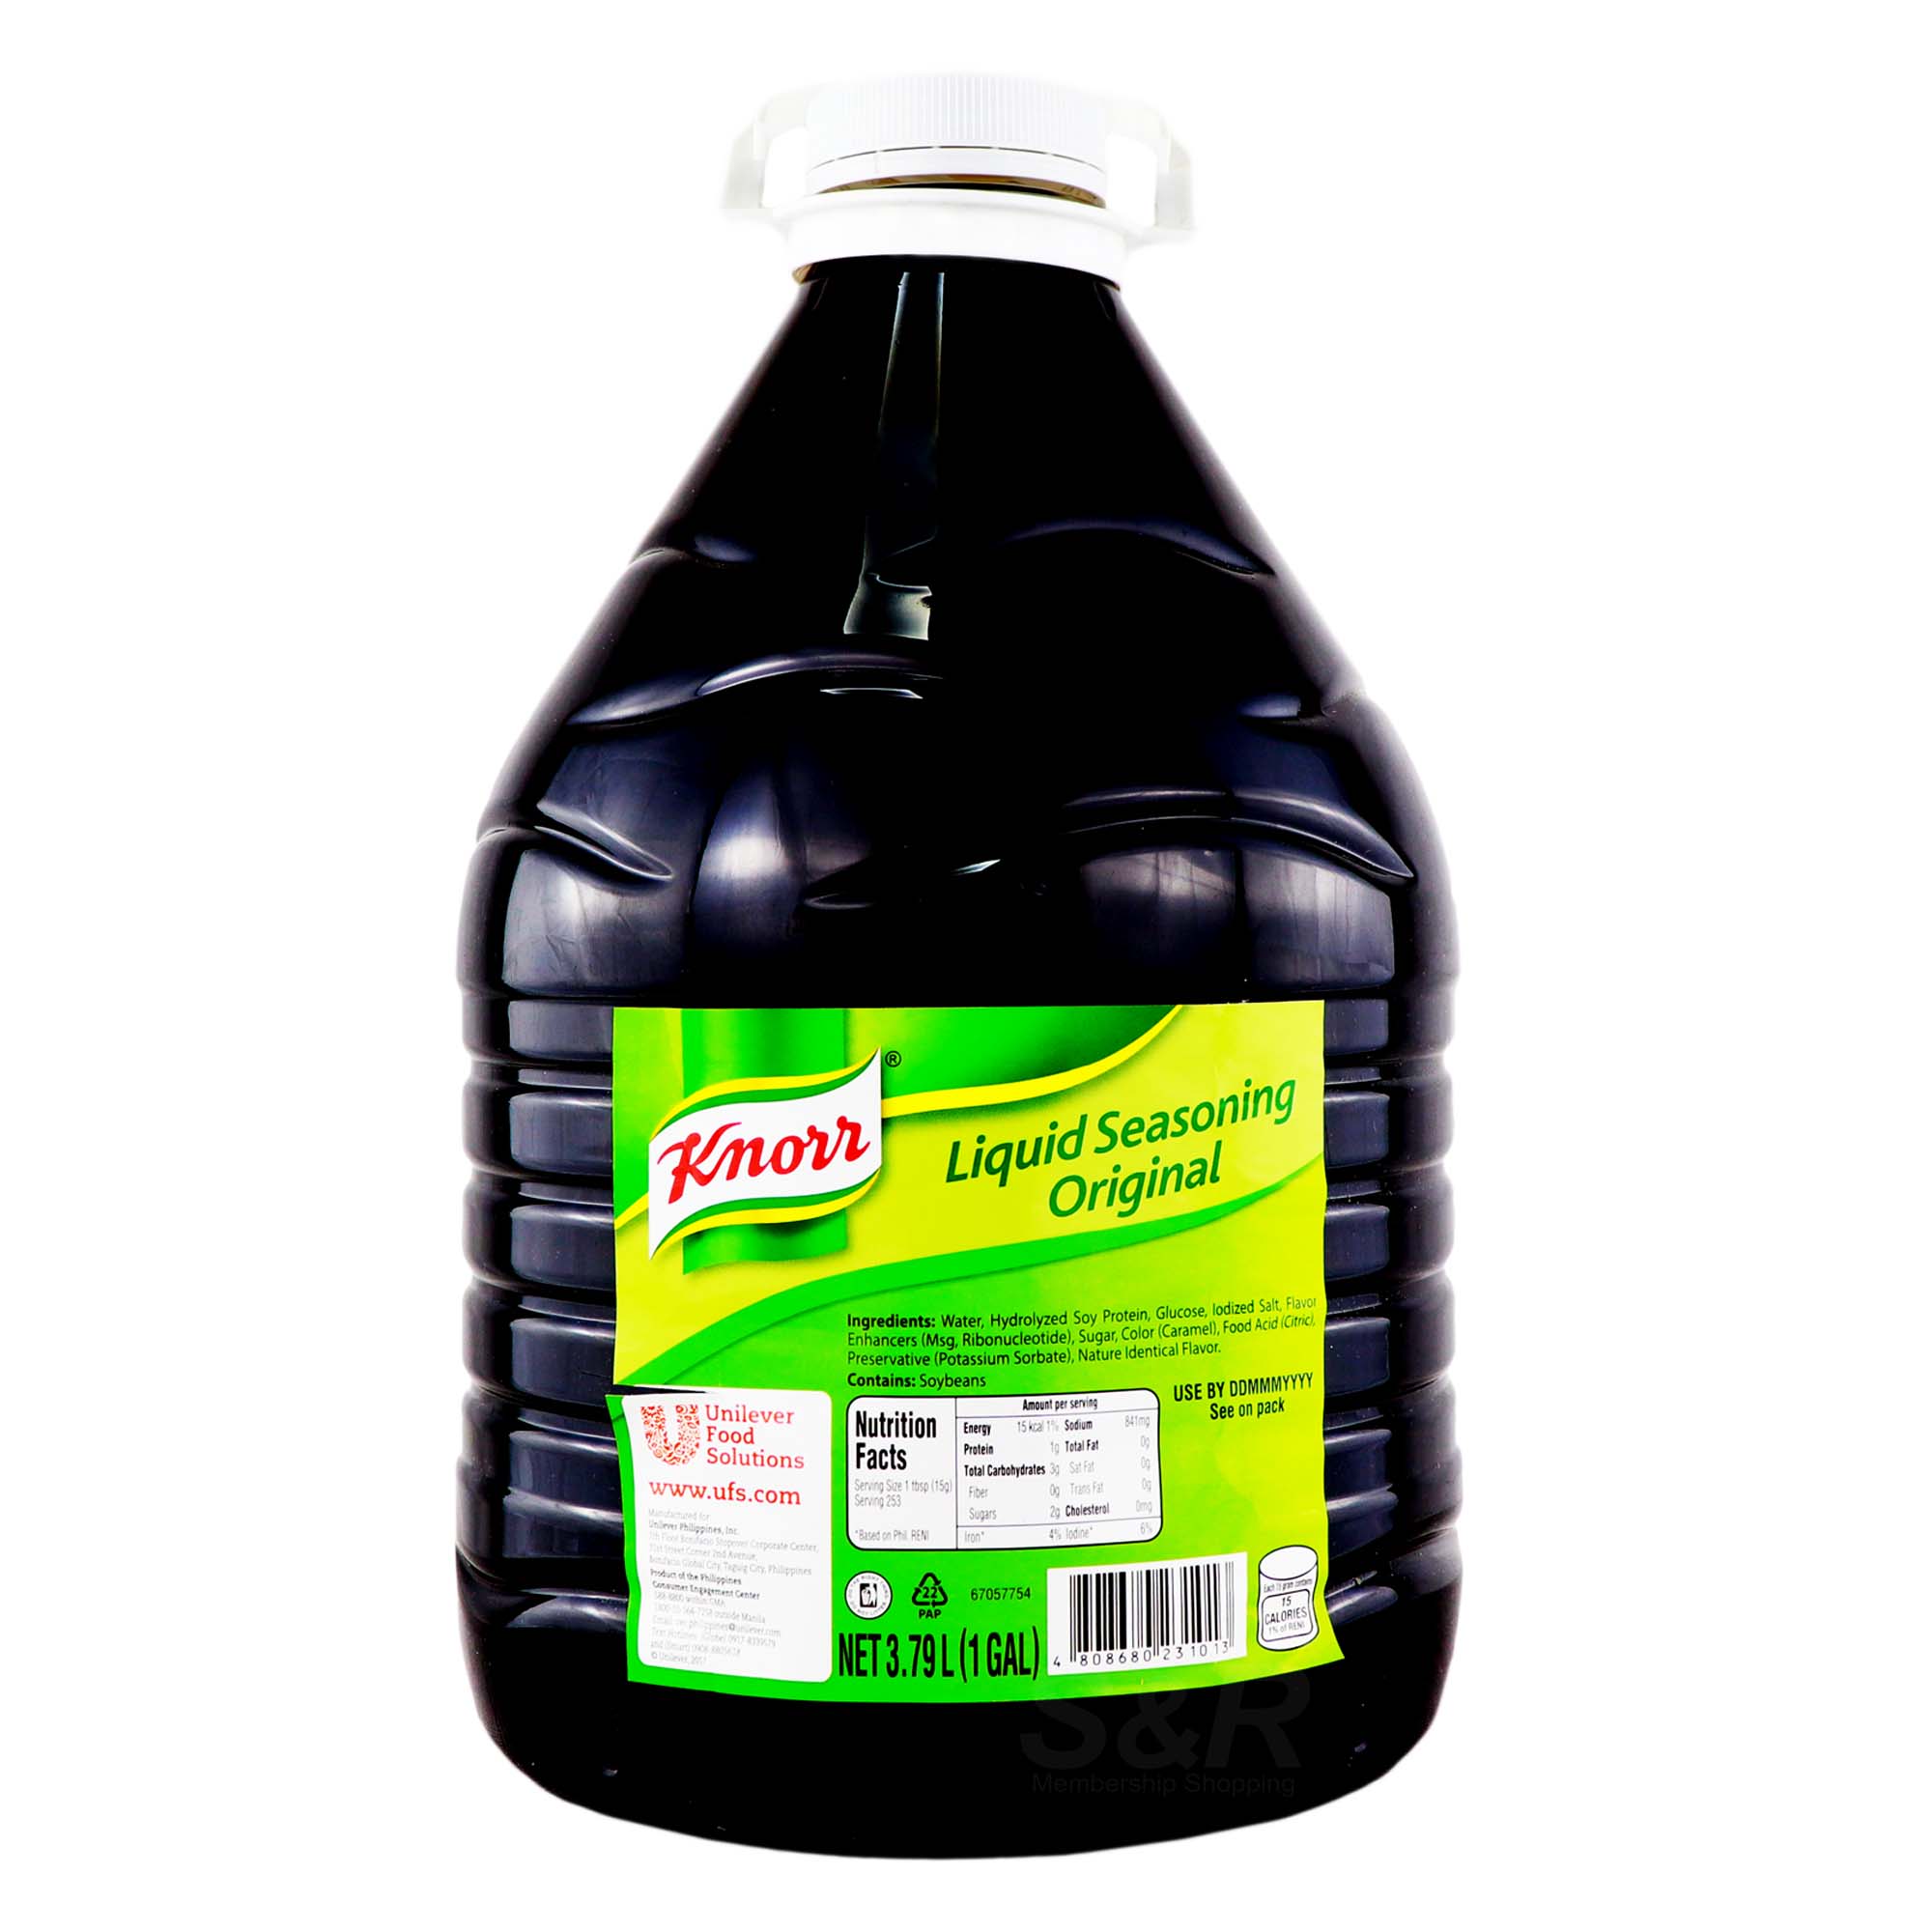 Knorr Liquid Seasoning Original 3.8L